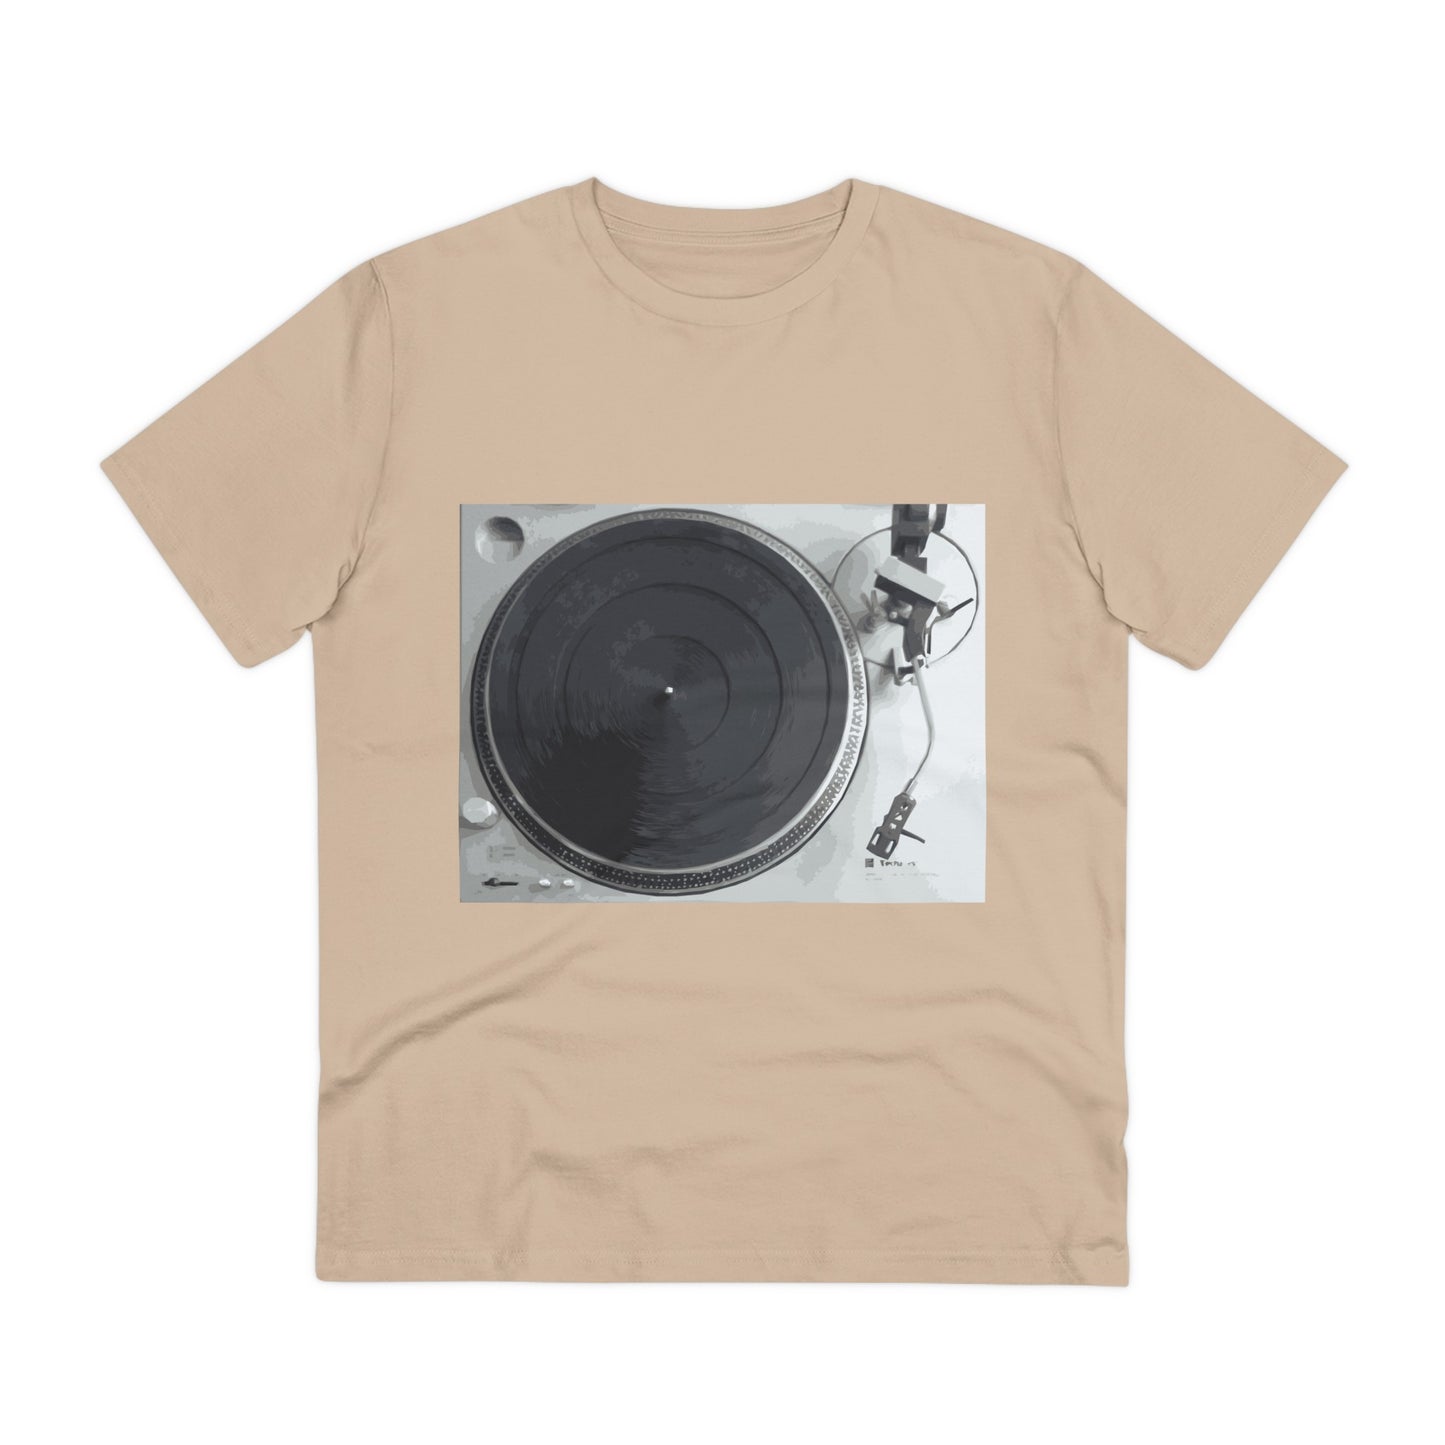 SL-1200 MK1 (1972) Turntable DJ T-Shirt